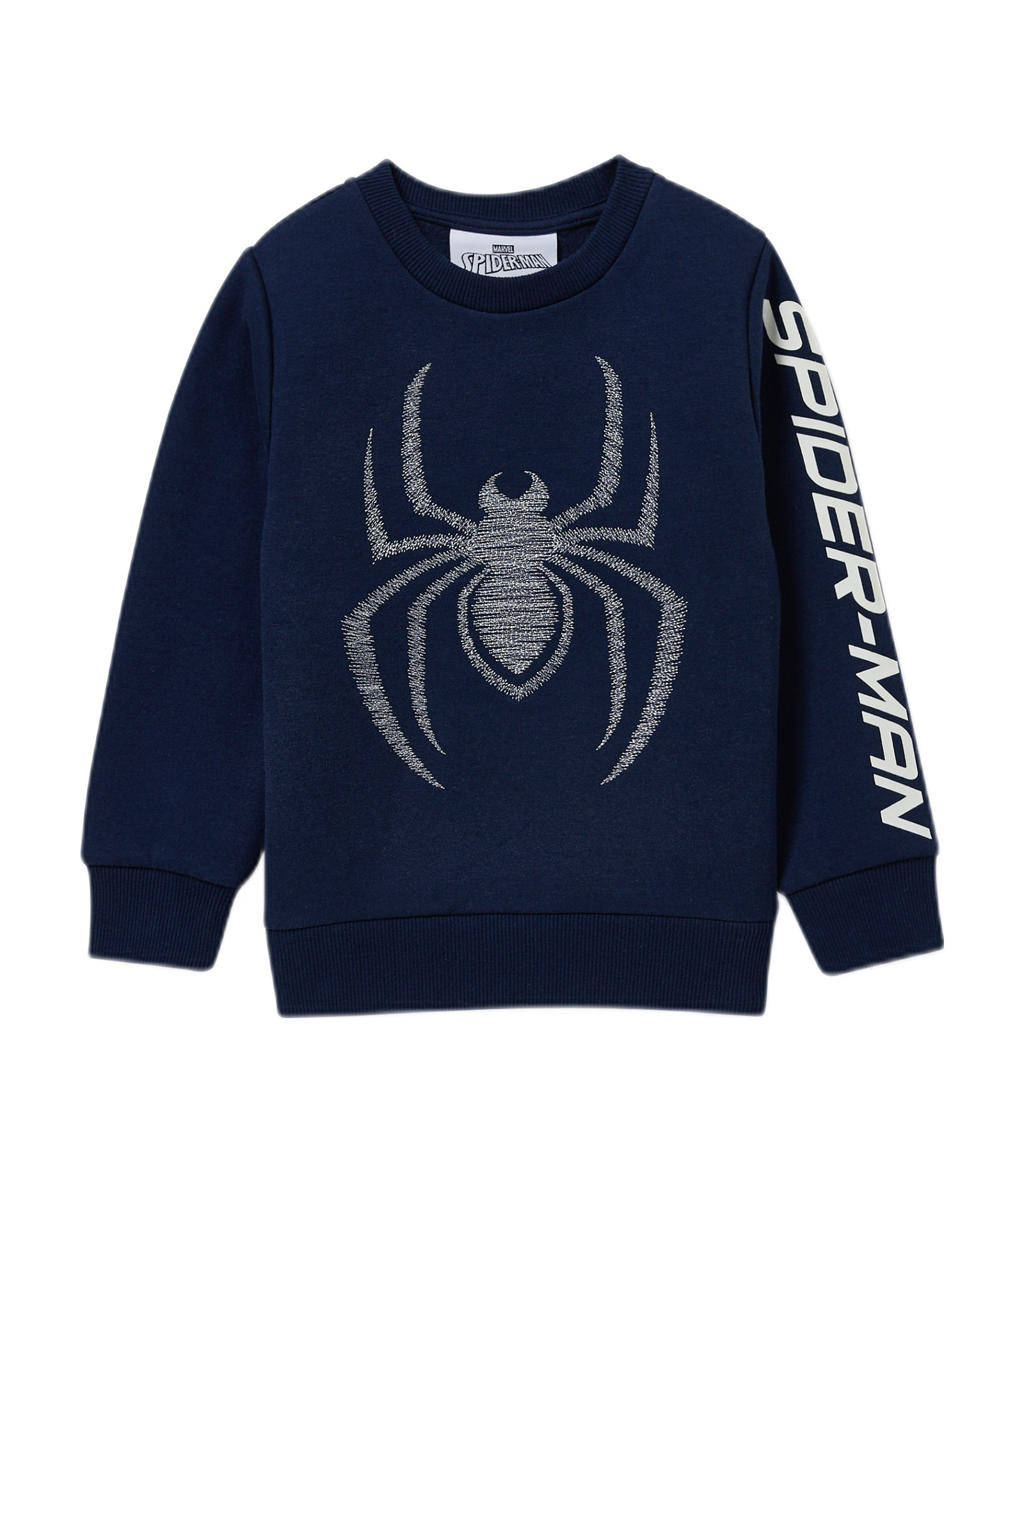 C&A Spider-Man sweater donkerblauw